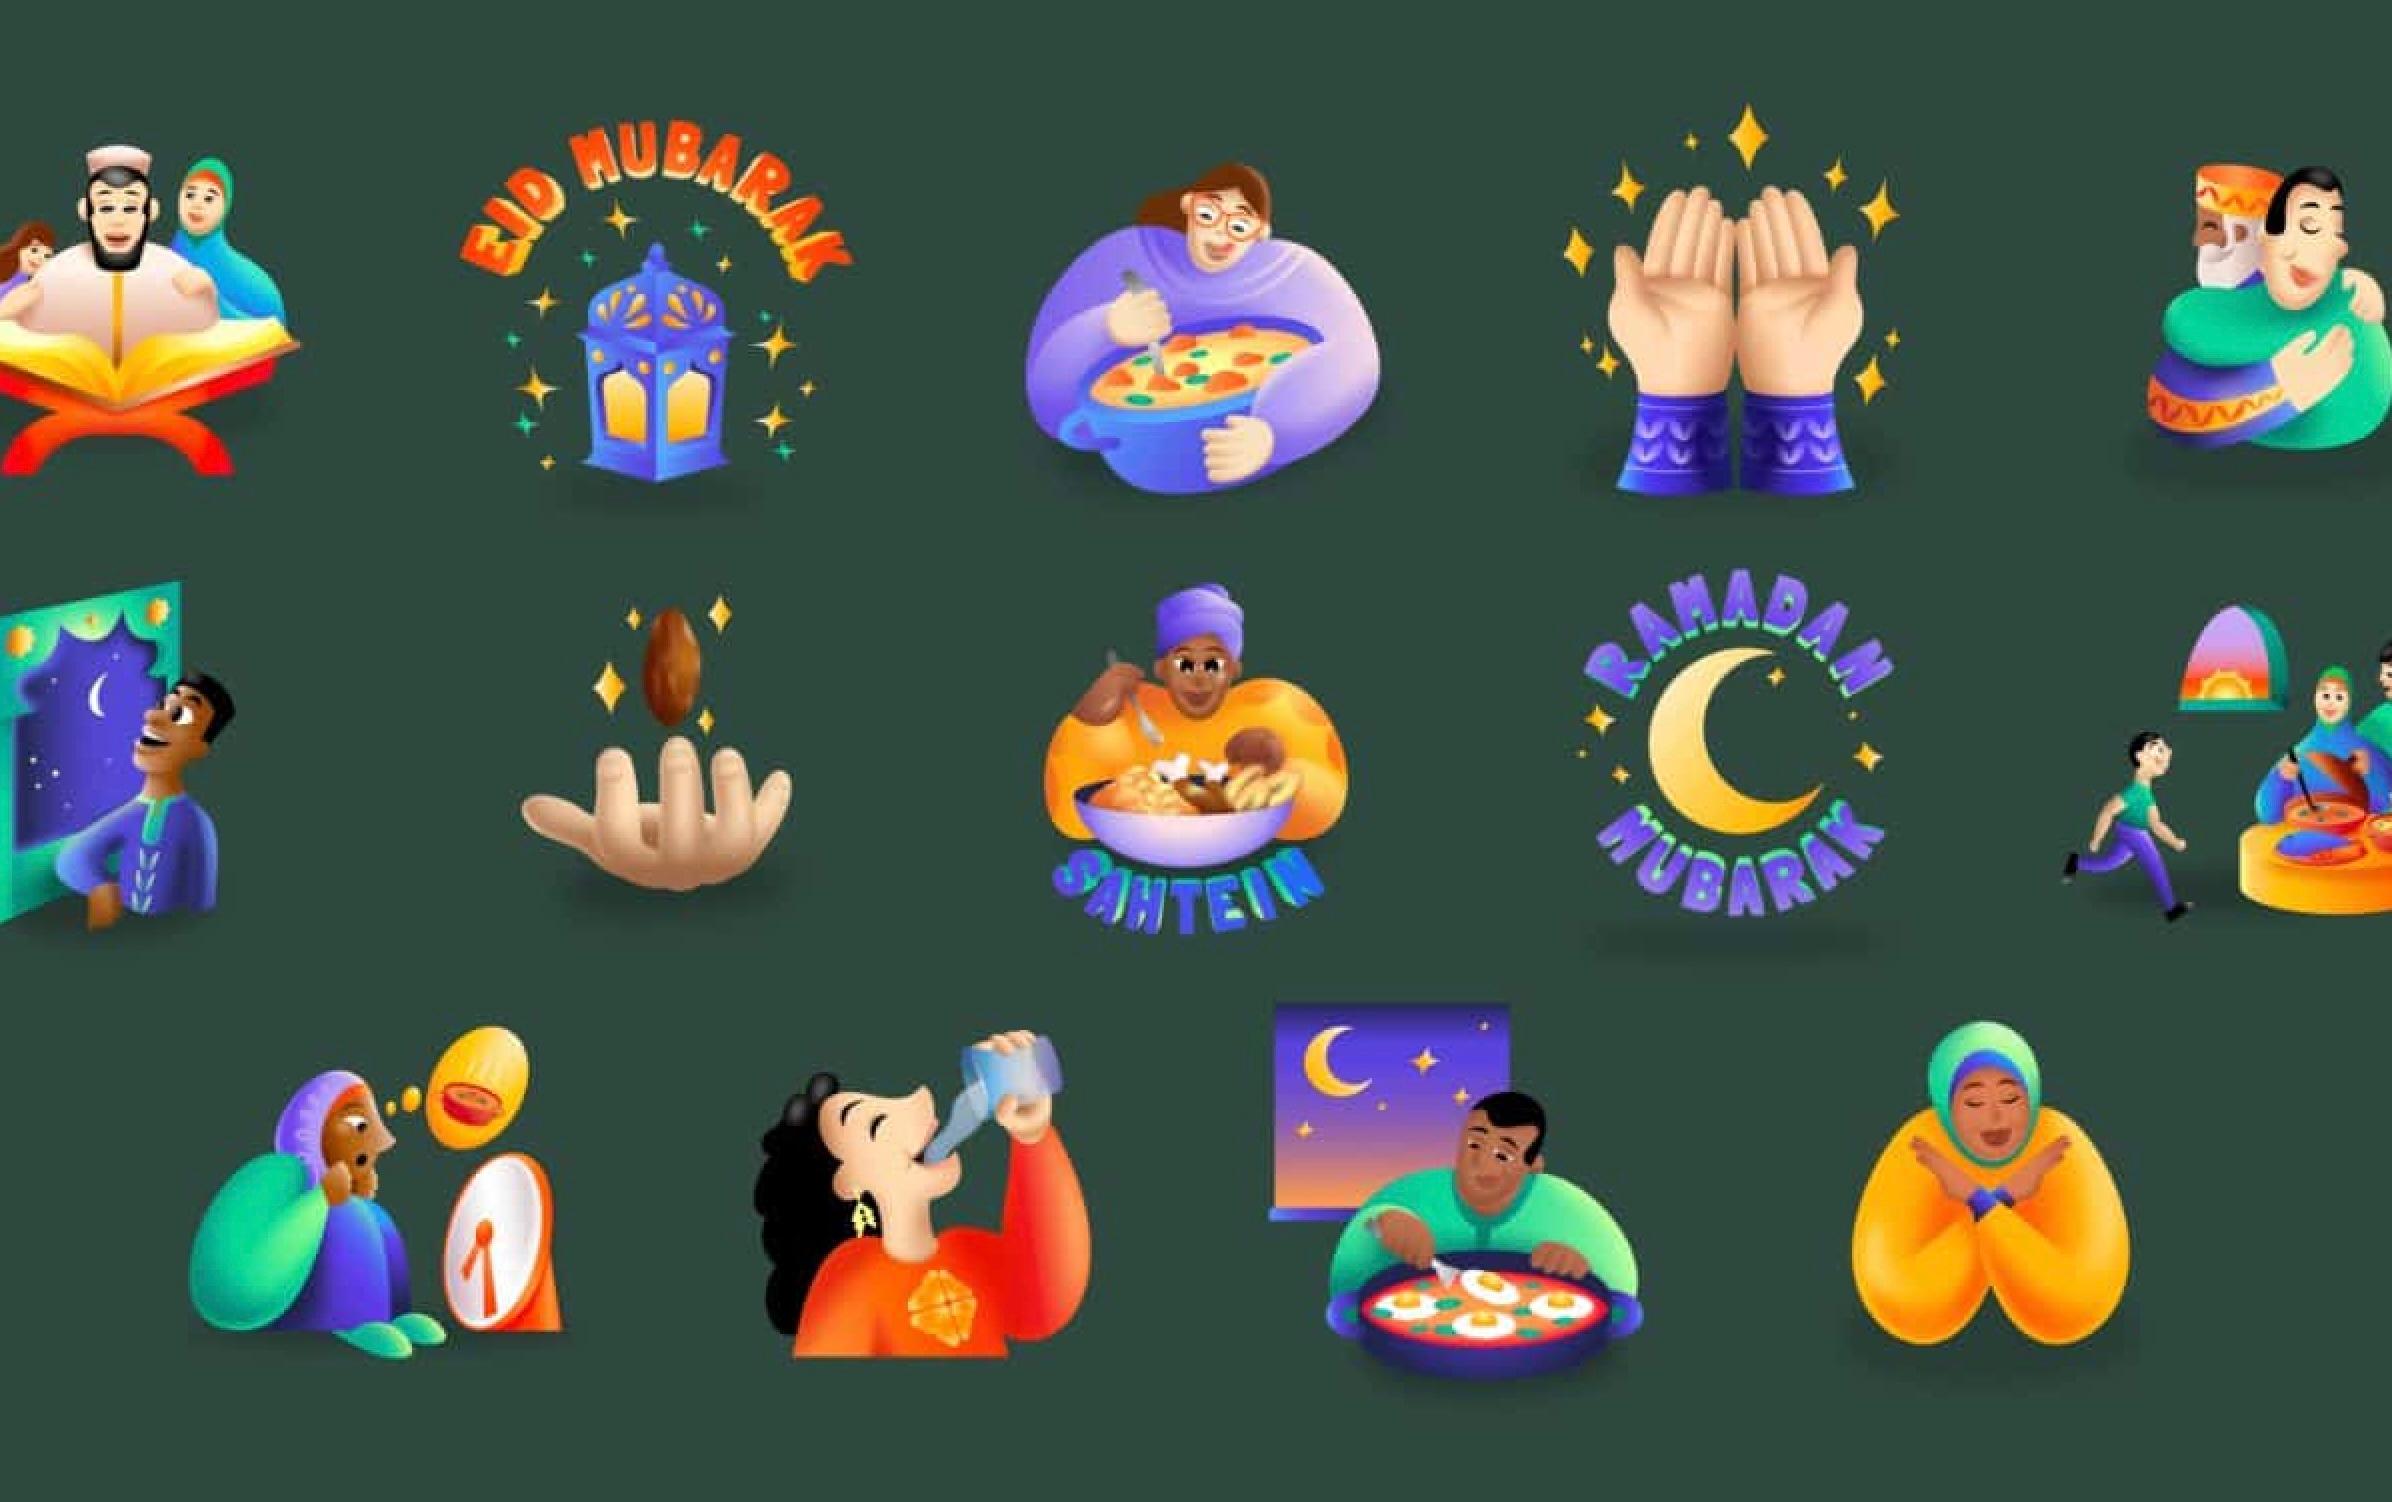 WhatsApp rolls out fun sticker packs for Ramadan